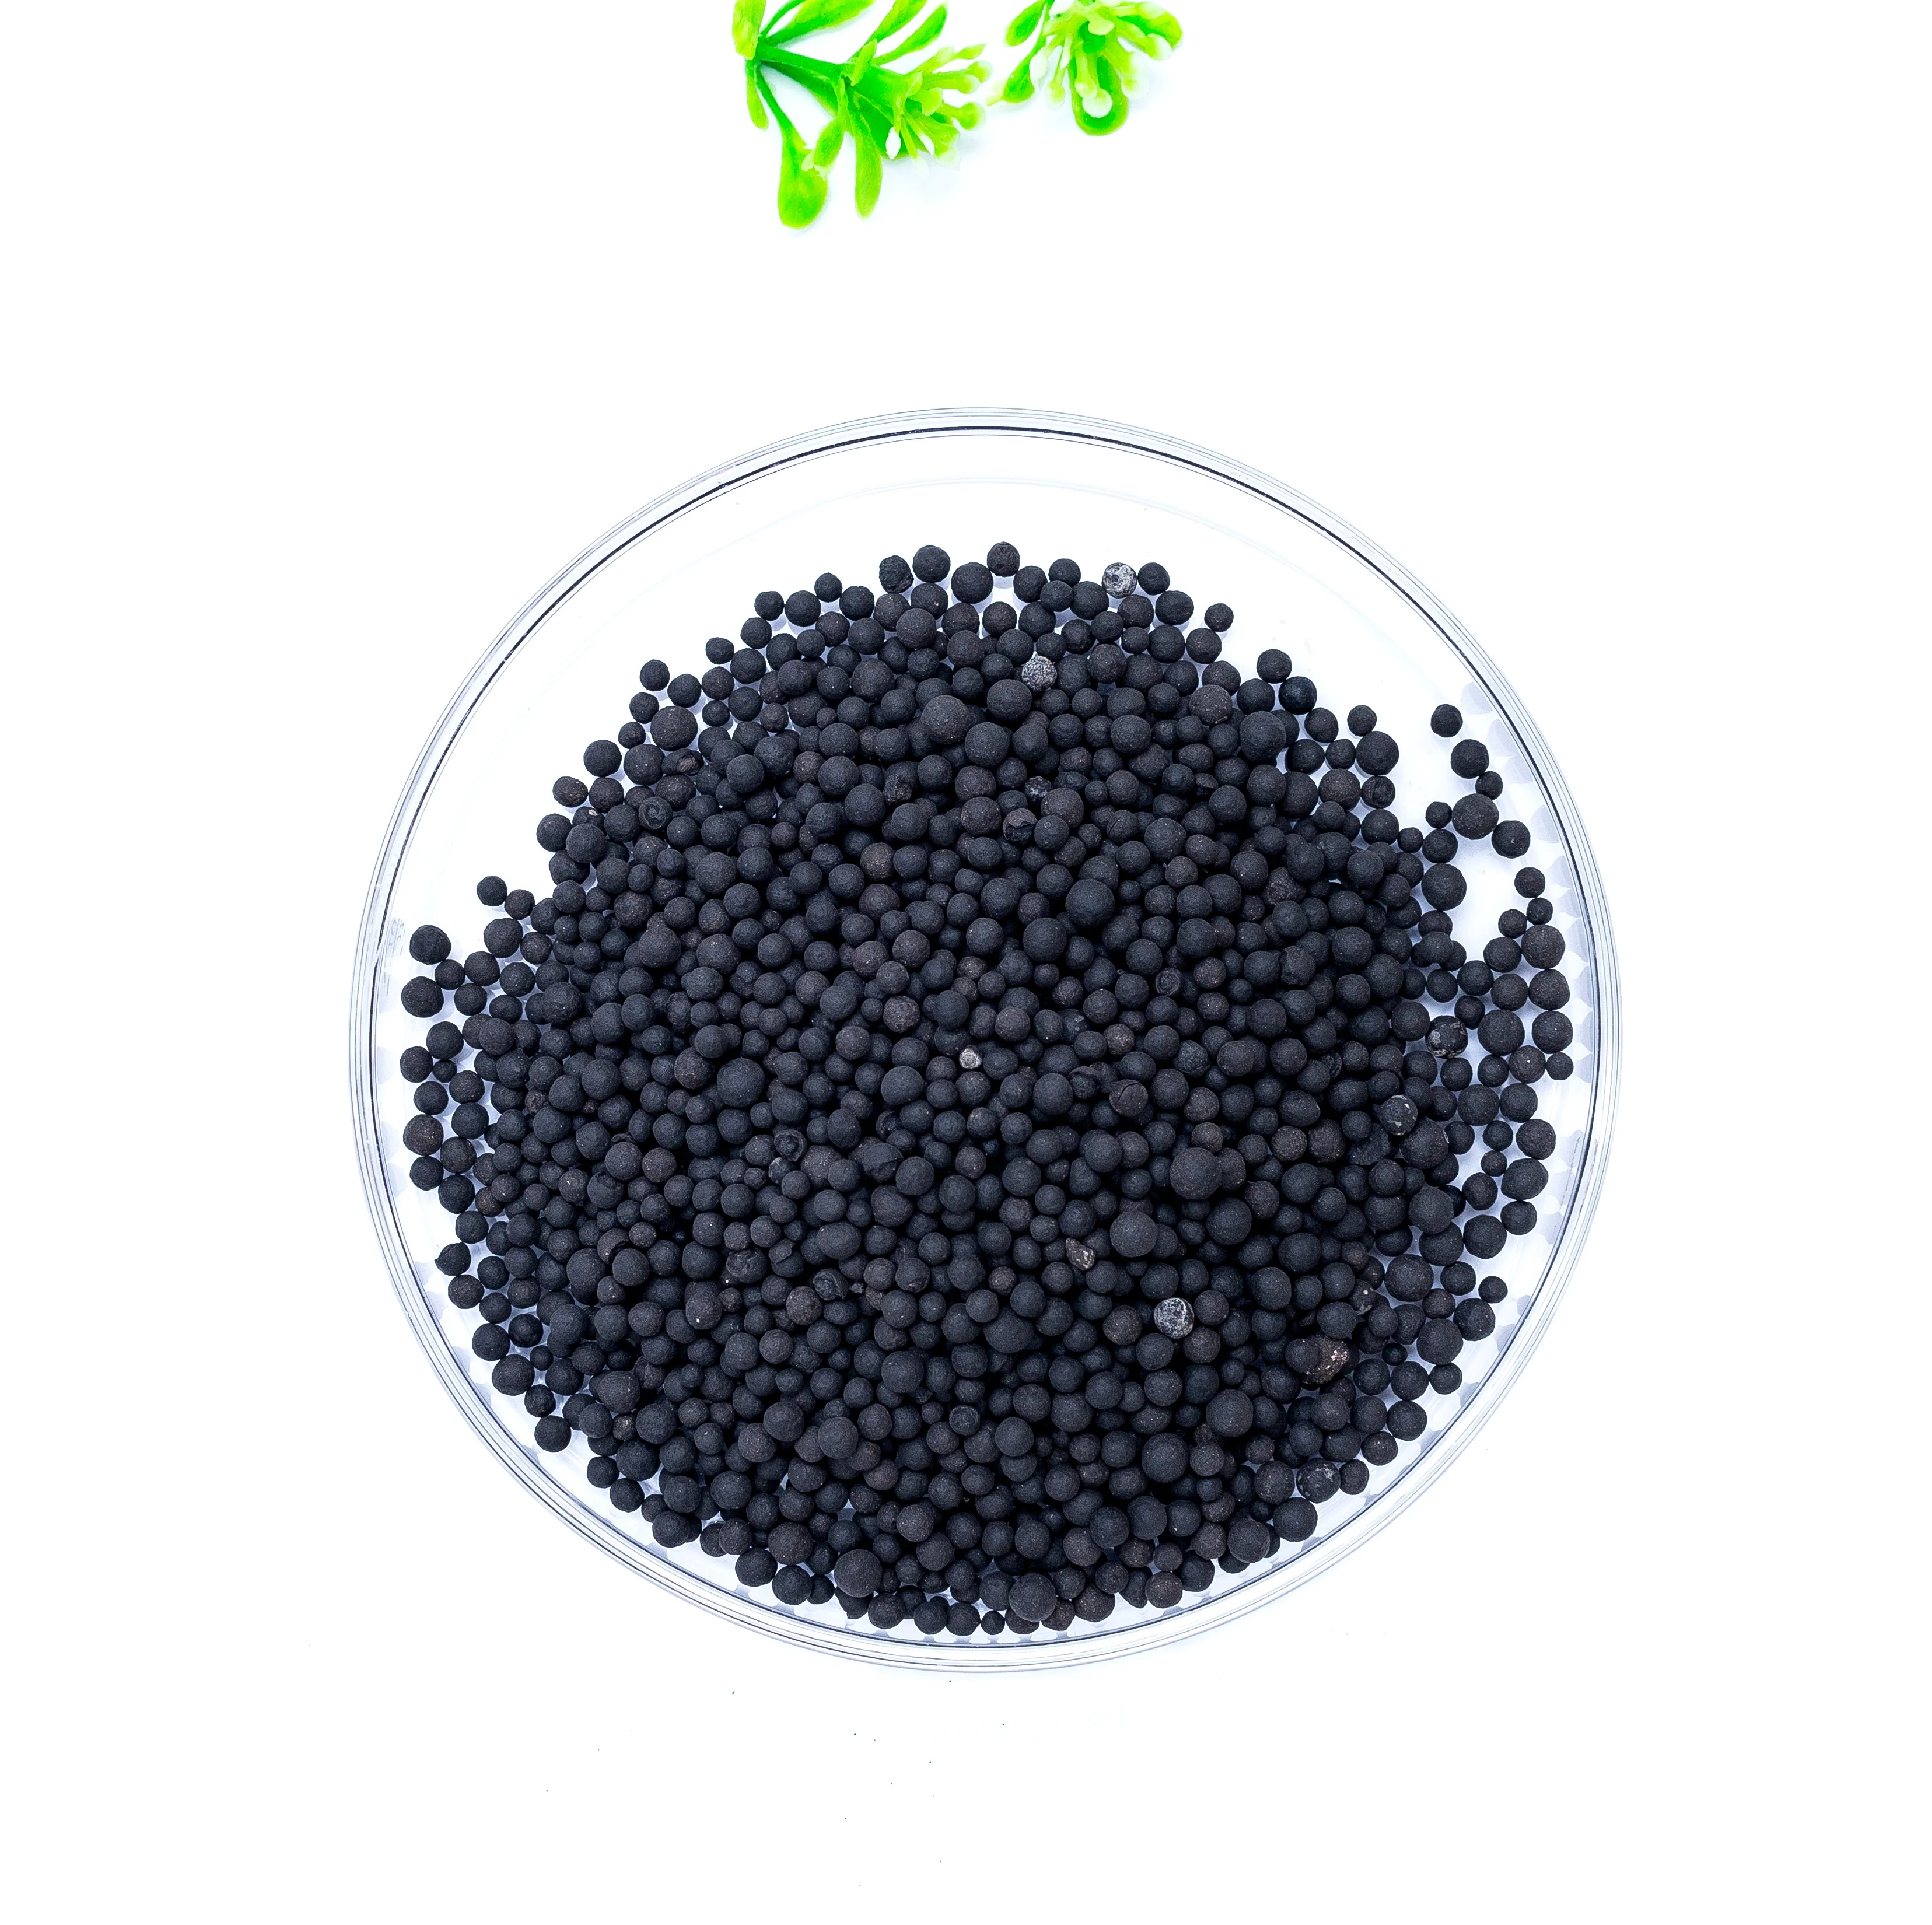 Hot selling Organic fertilizer Kelp Extract from Ascophyllum Nodosum Organic Granular NPK Fertilizer (1600559826598)